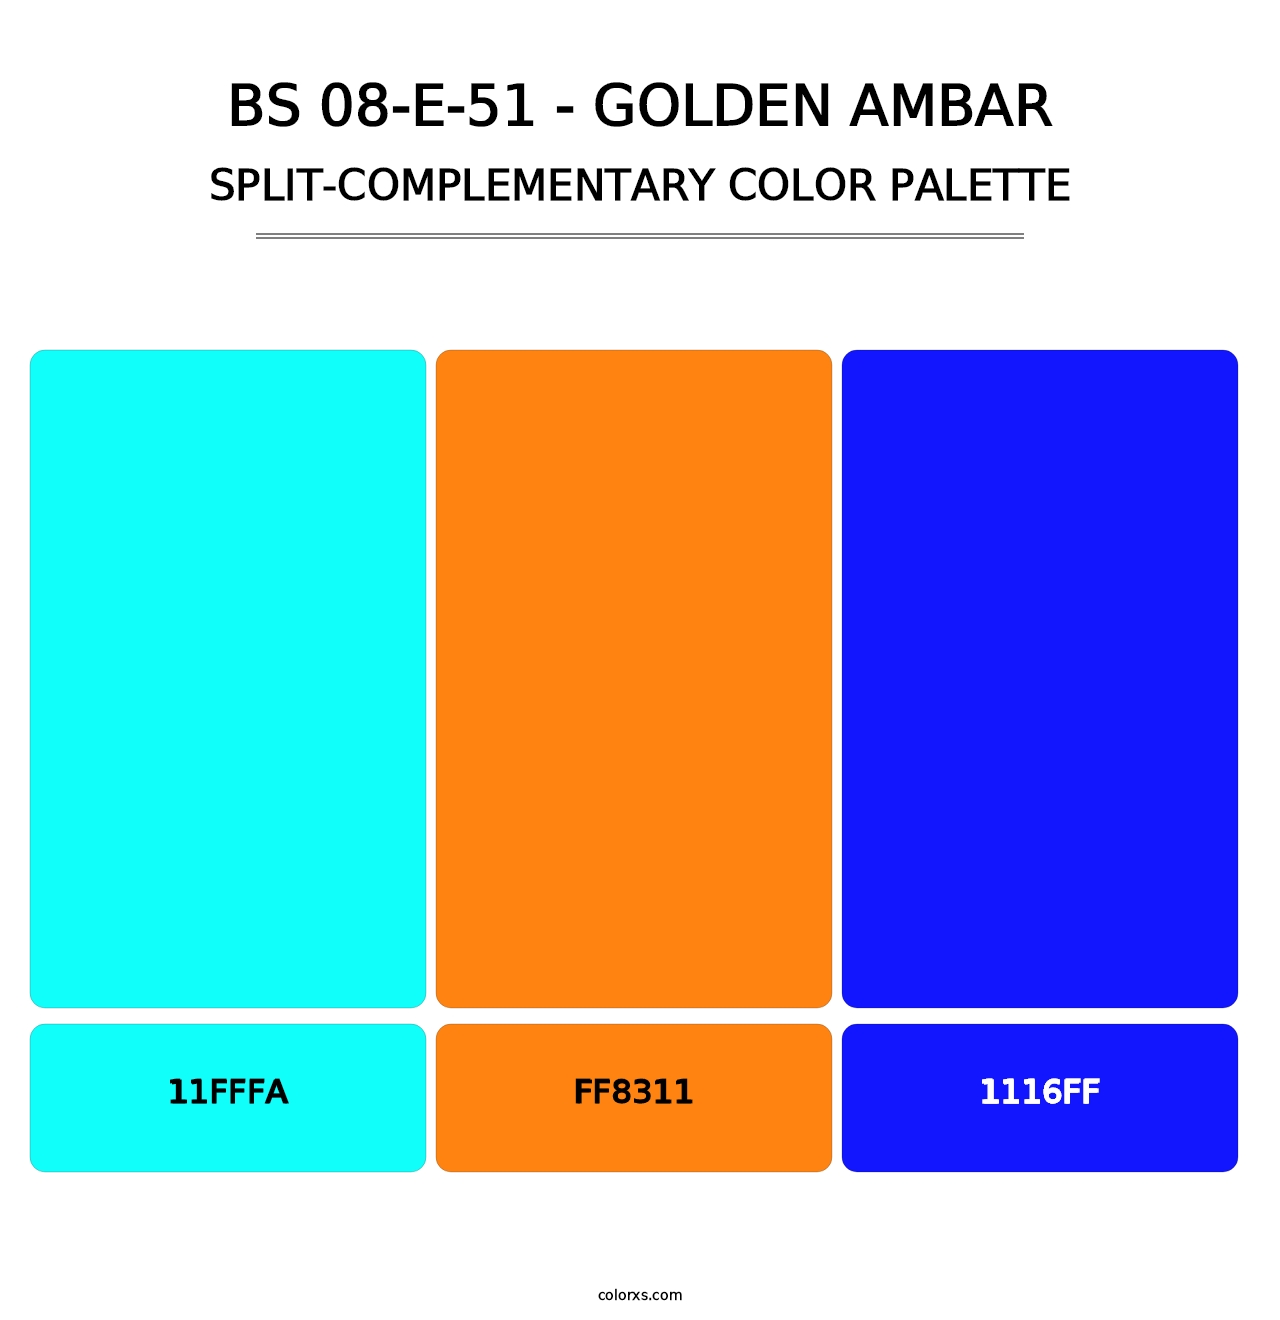 BS 08-E-51 - Golden Ambar - Split-Complementary Color Palette